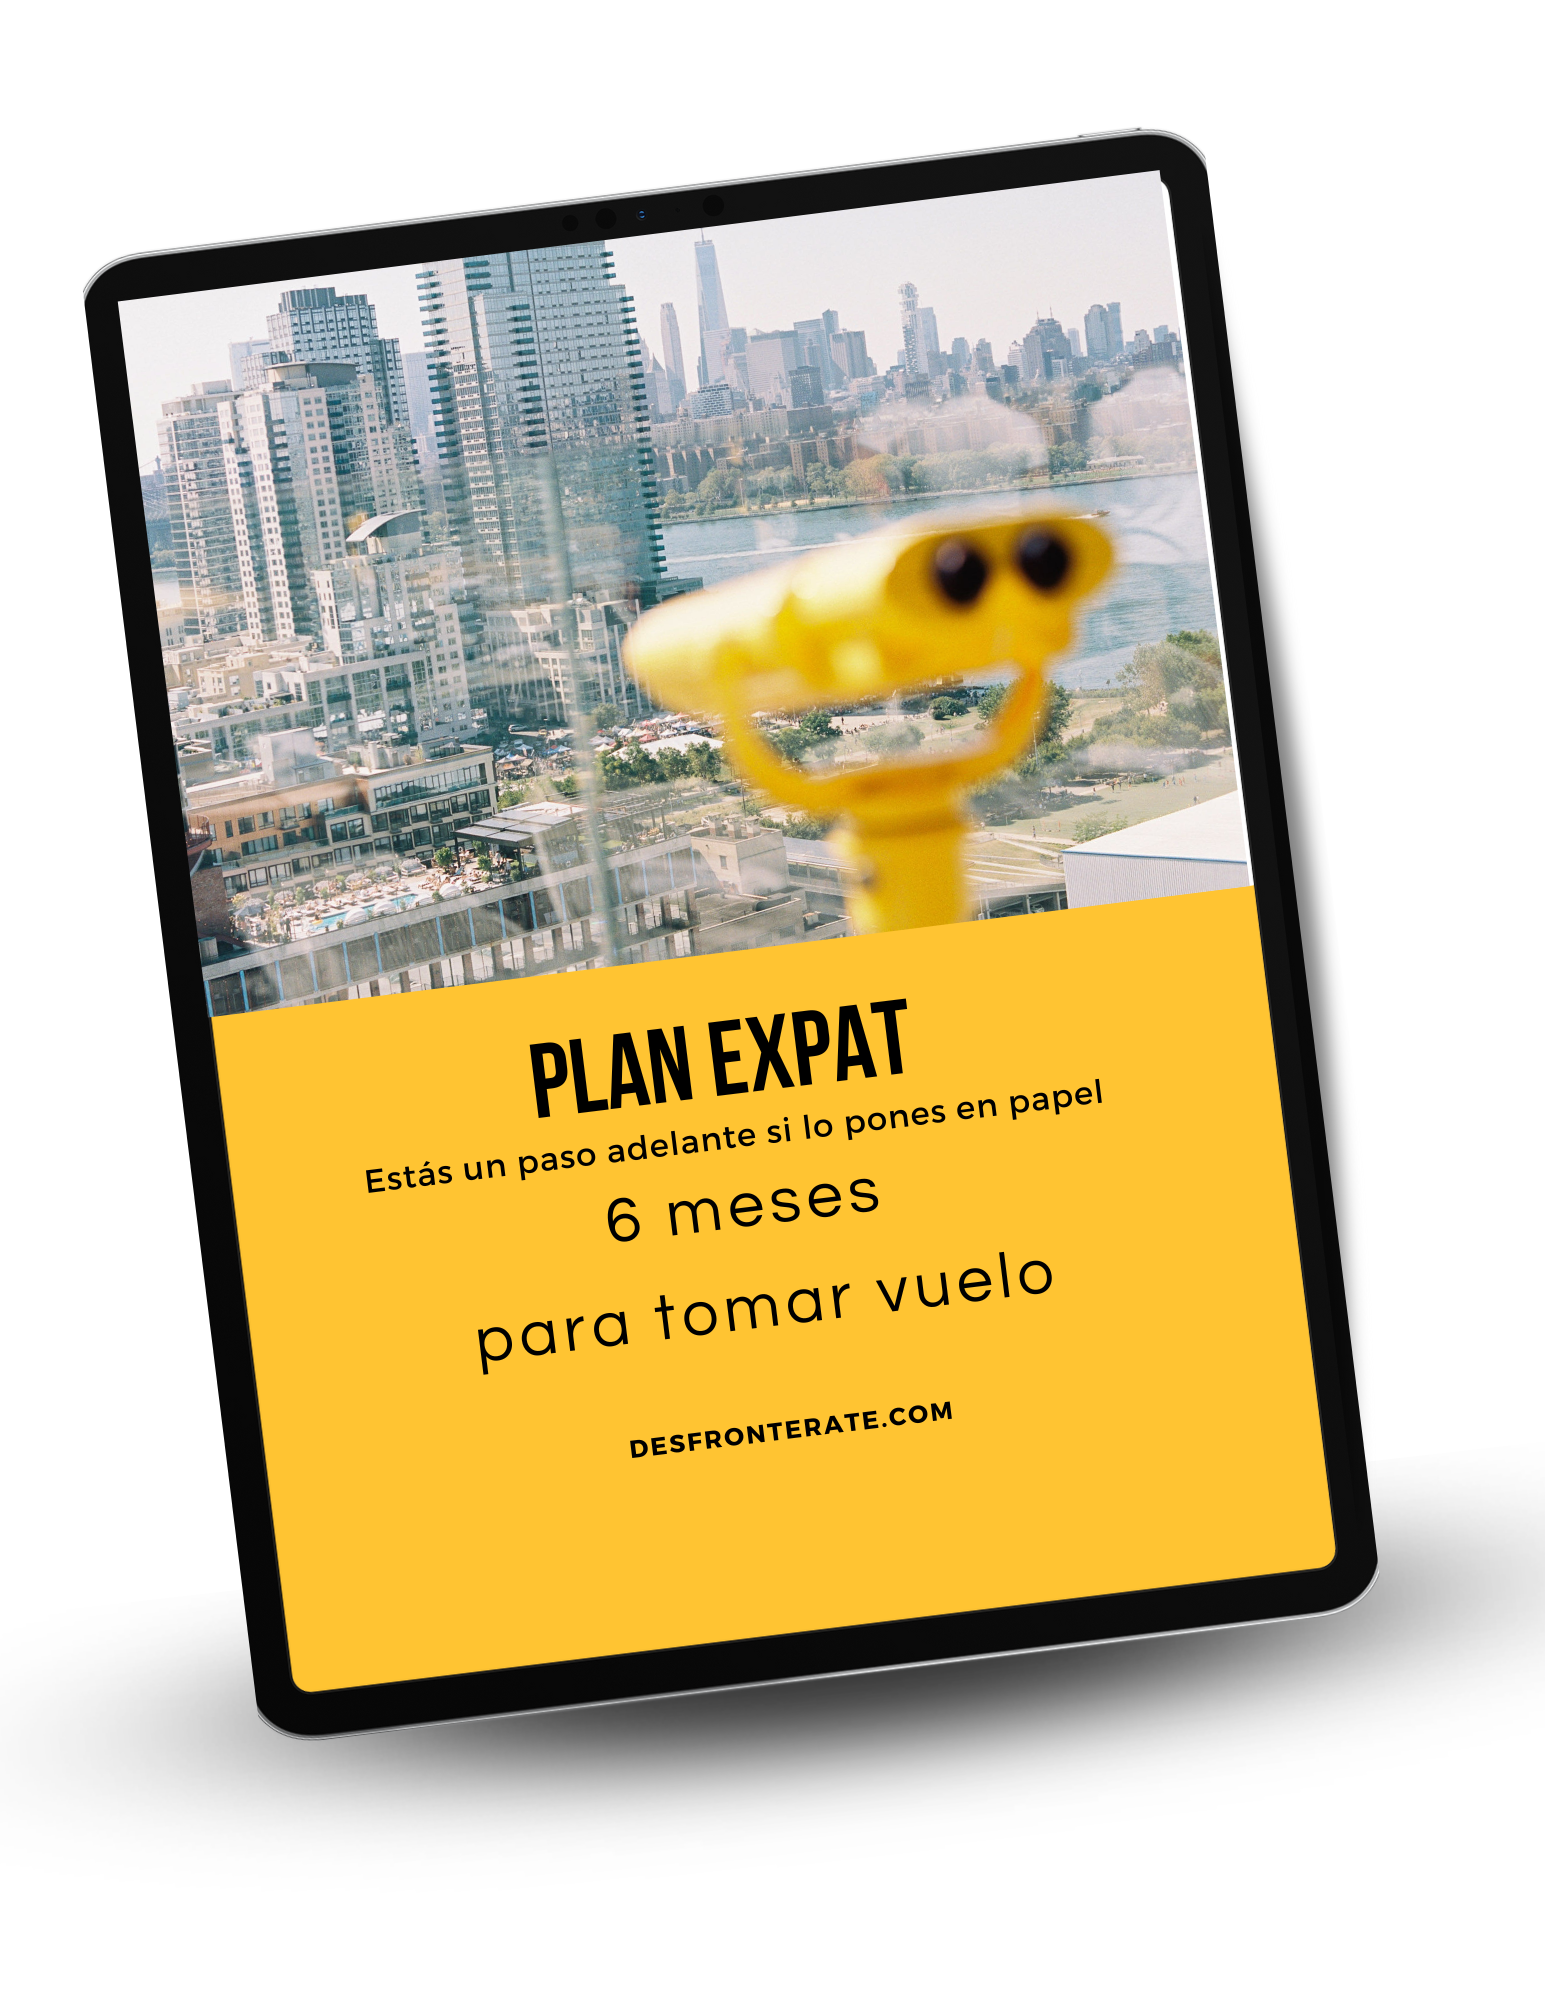 Plan expat imagen